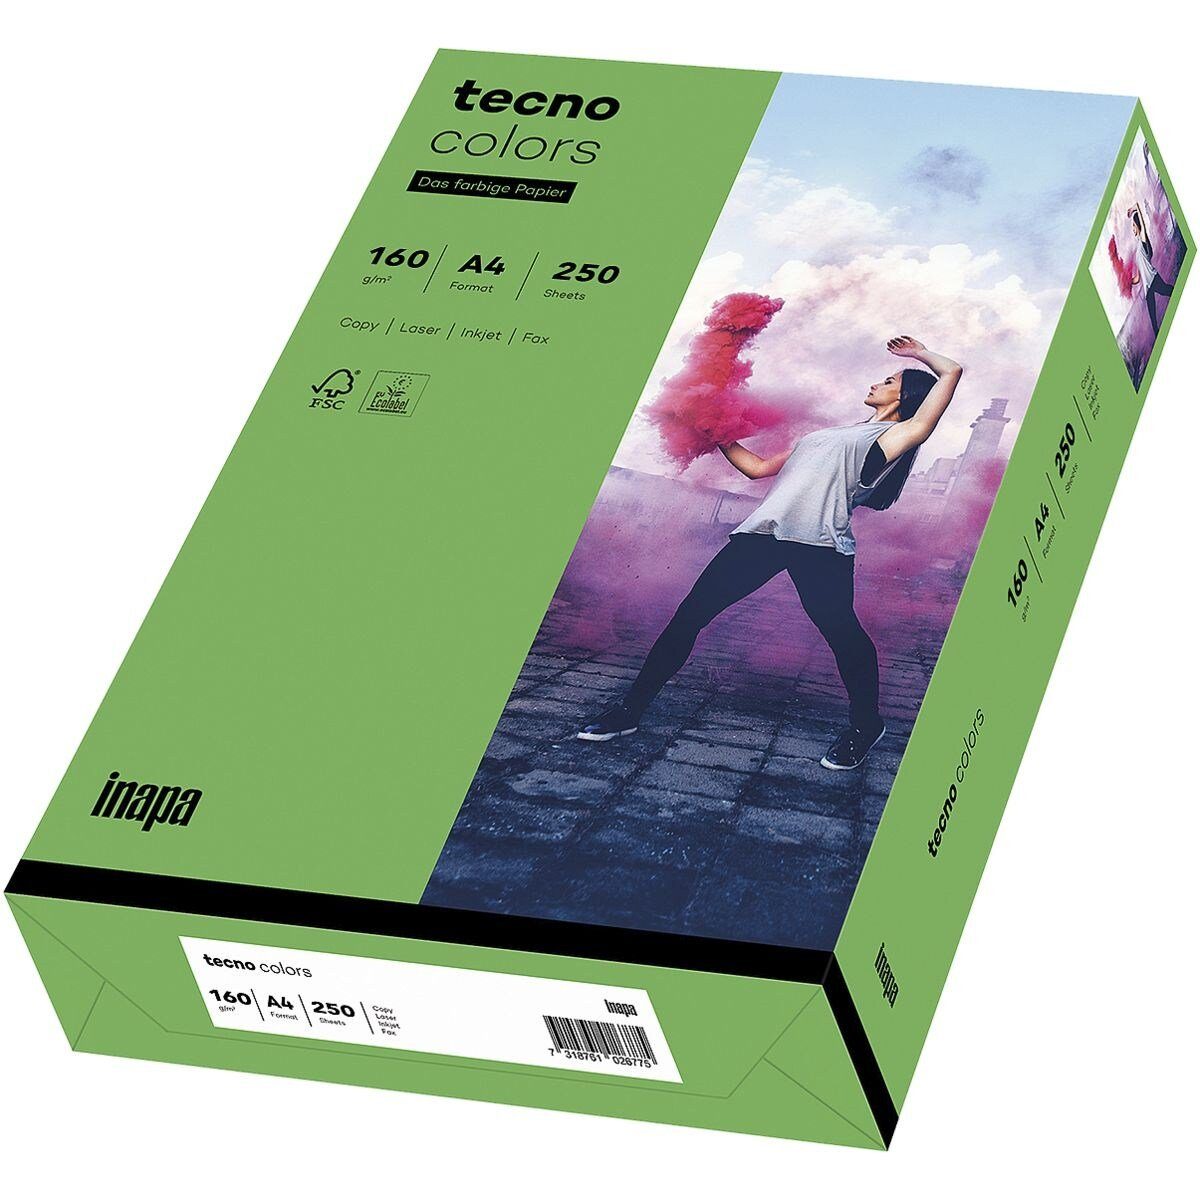 Rainbow tecno tecno Format 160 Inapa Kopierpapier g/m², A4, Intensivfarben, Drucker- intensivgrün DIN und Colors, Blatt / 250